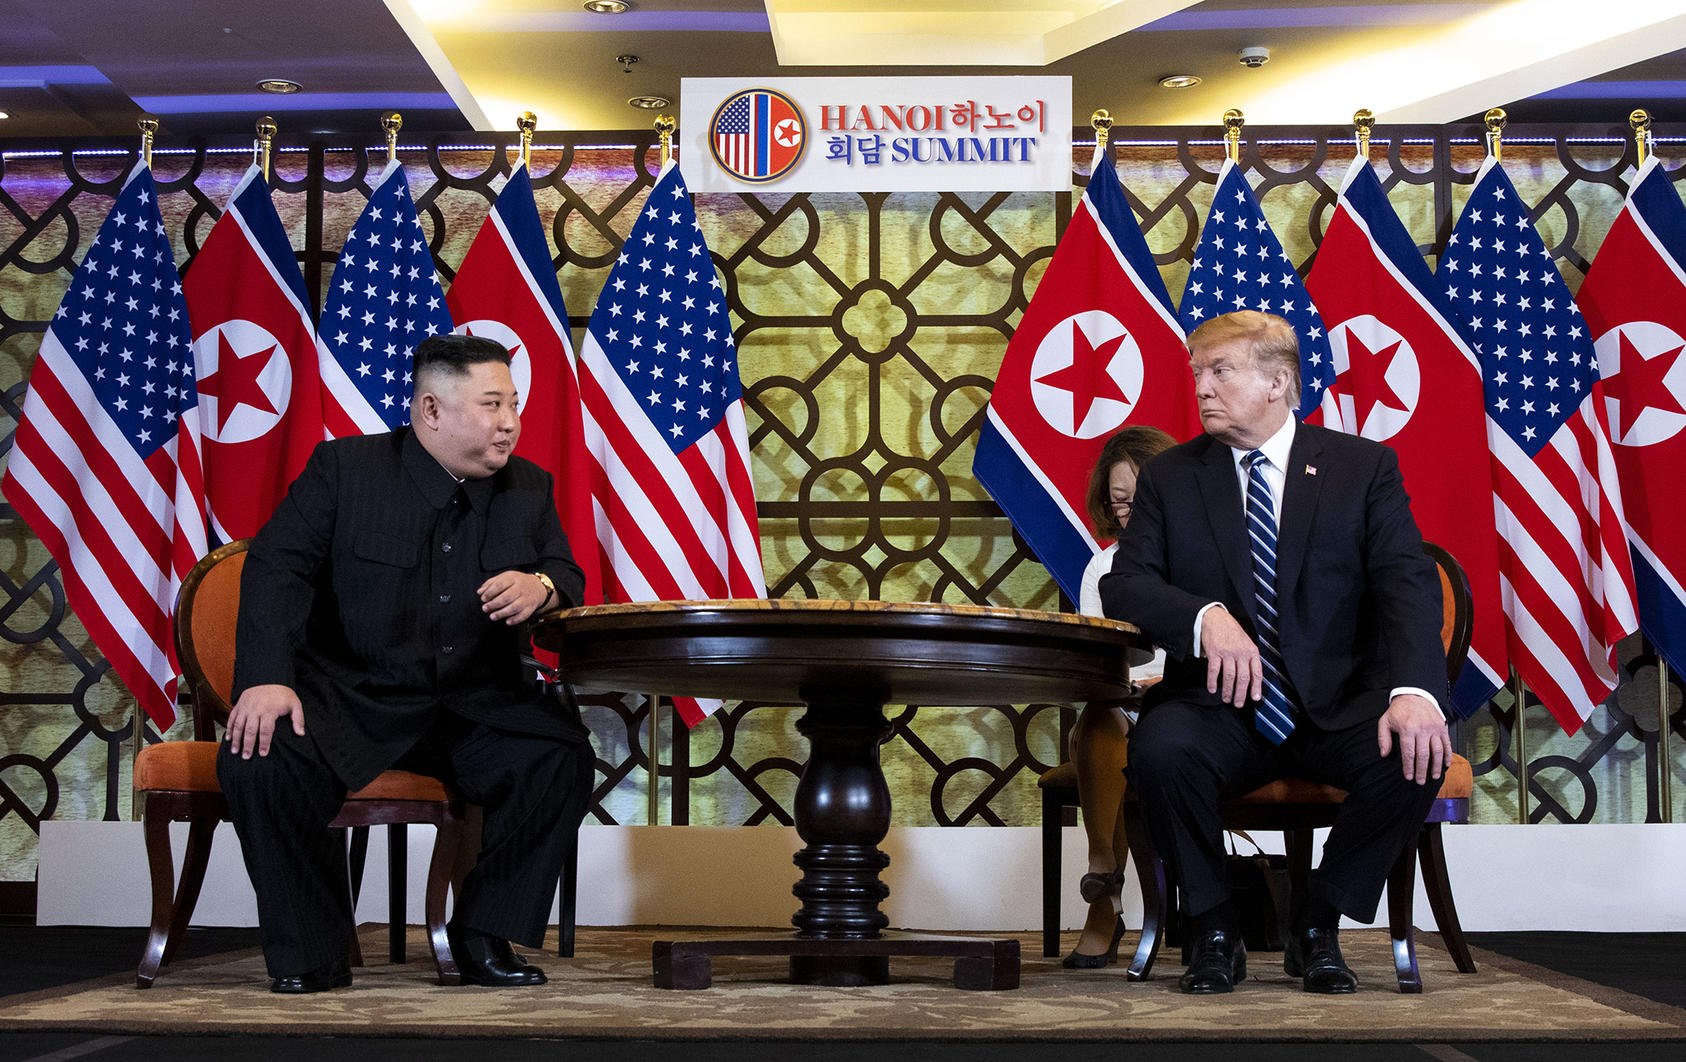 President Donald Trump and Kim Jong Un, the North Korean leader, meet at the Metropole Hotel in Hanoi, Vietnam, Feb. 28, 2019. (Doug Mills/The New York Times)